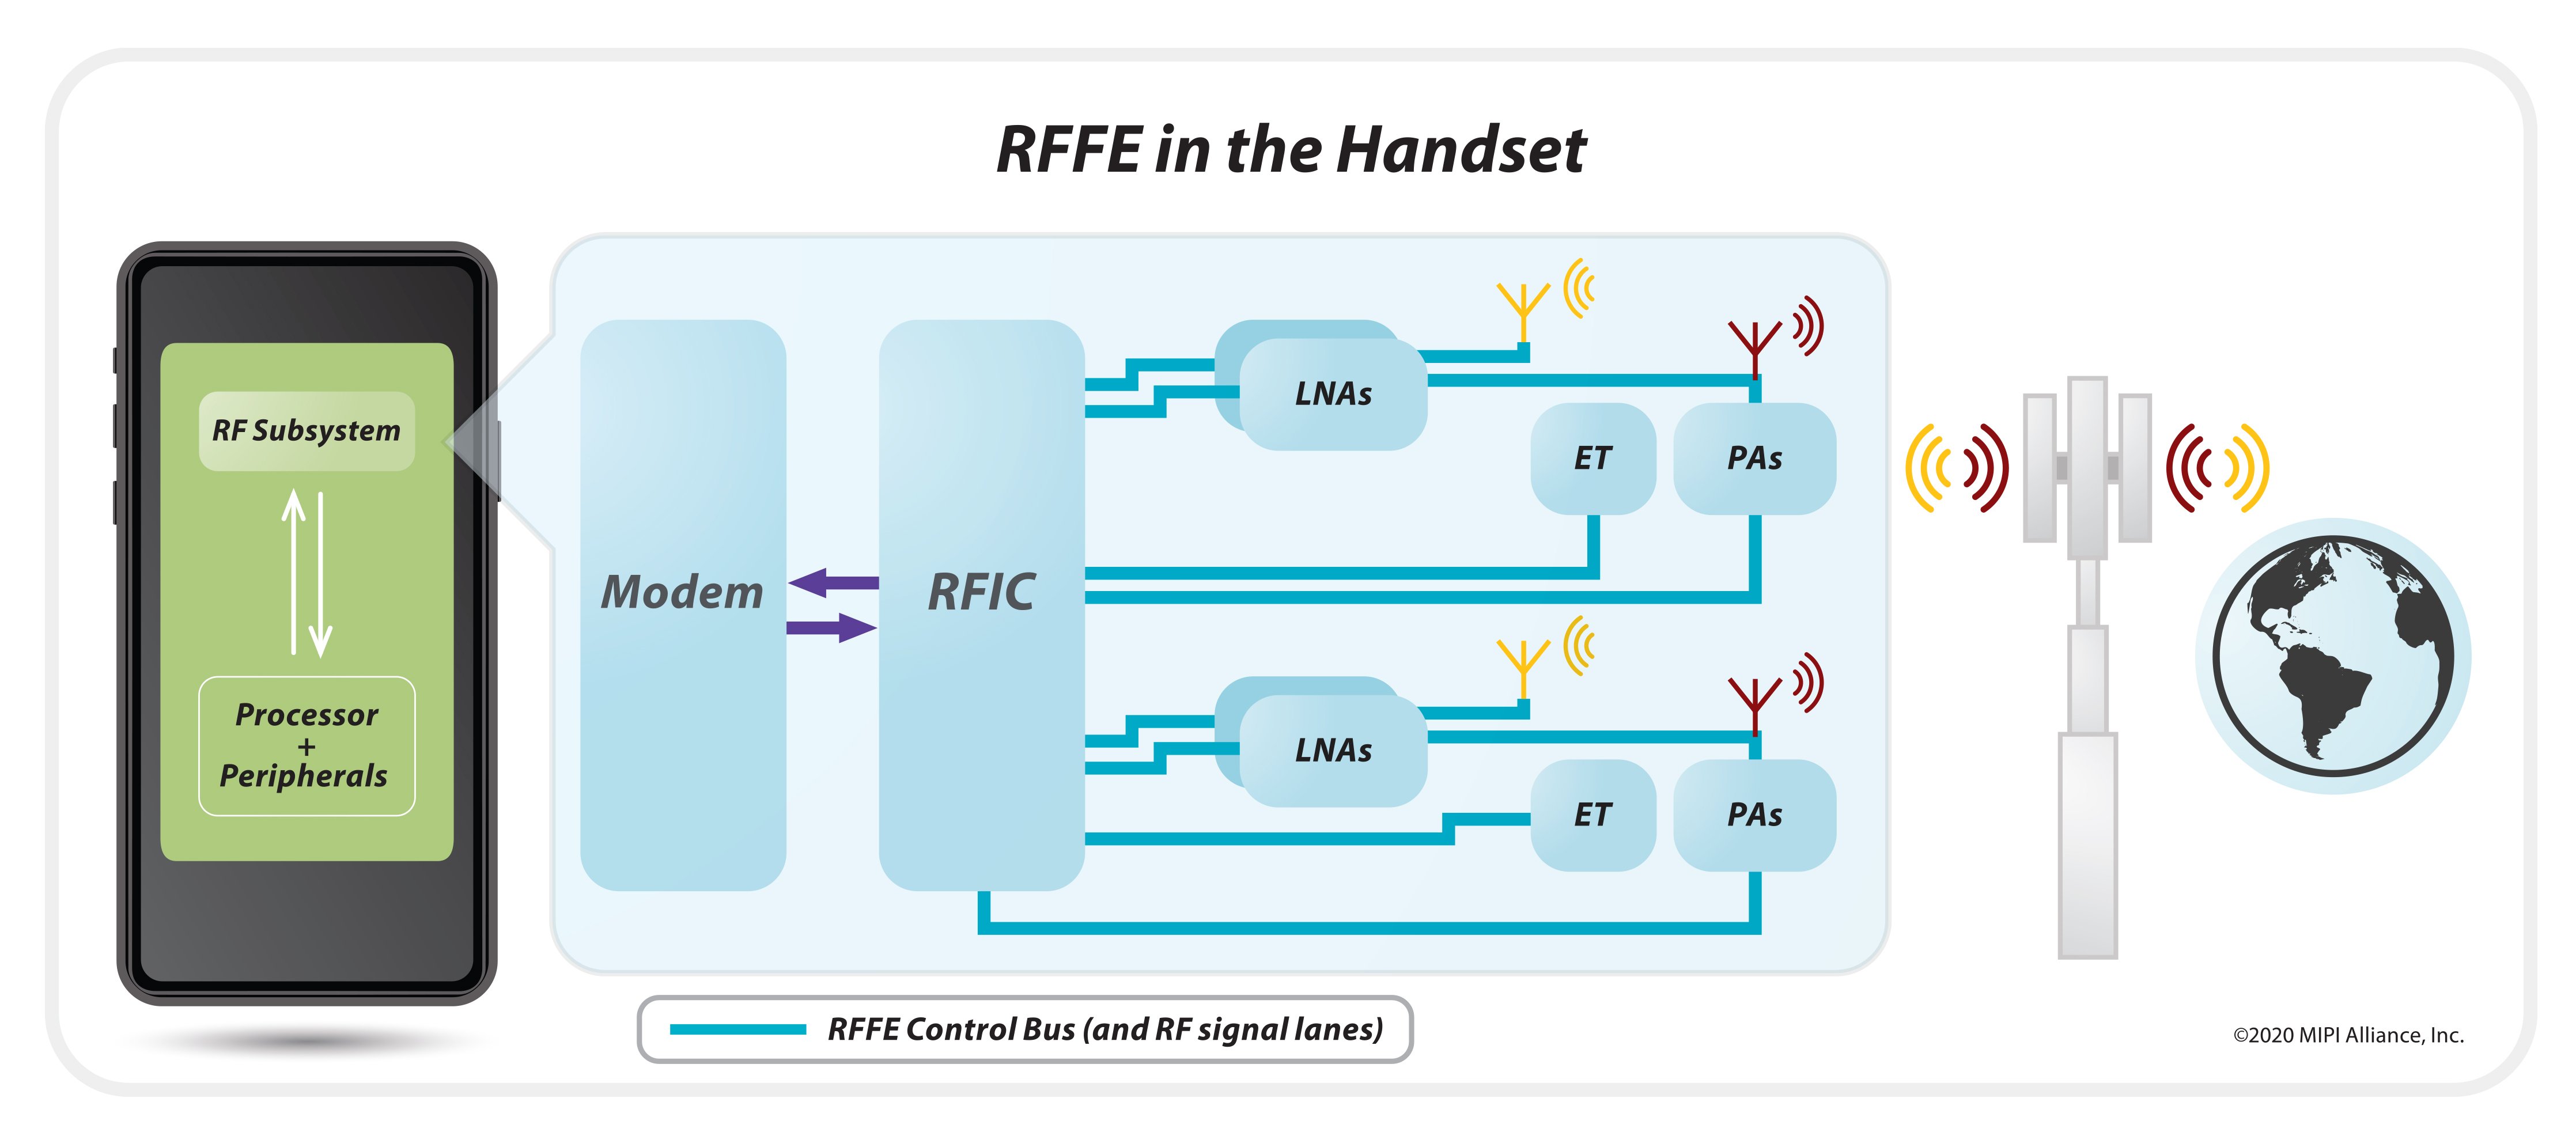 RFFE in the Handset